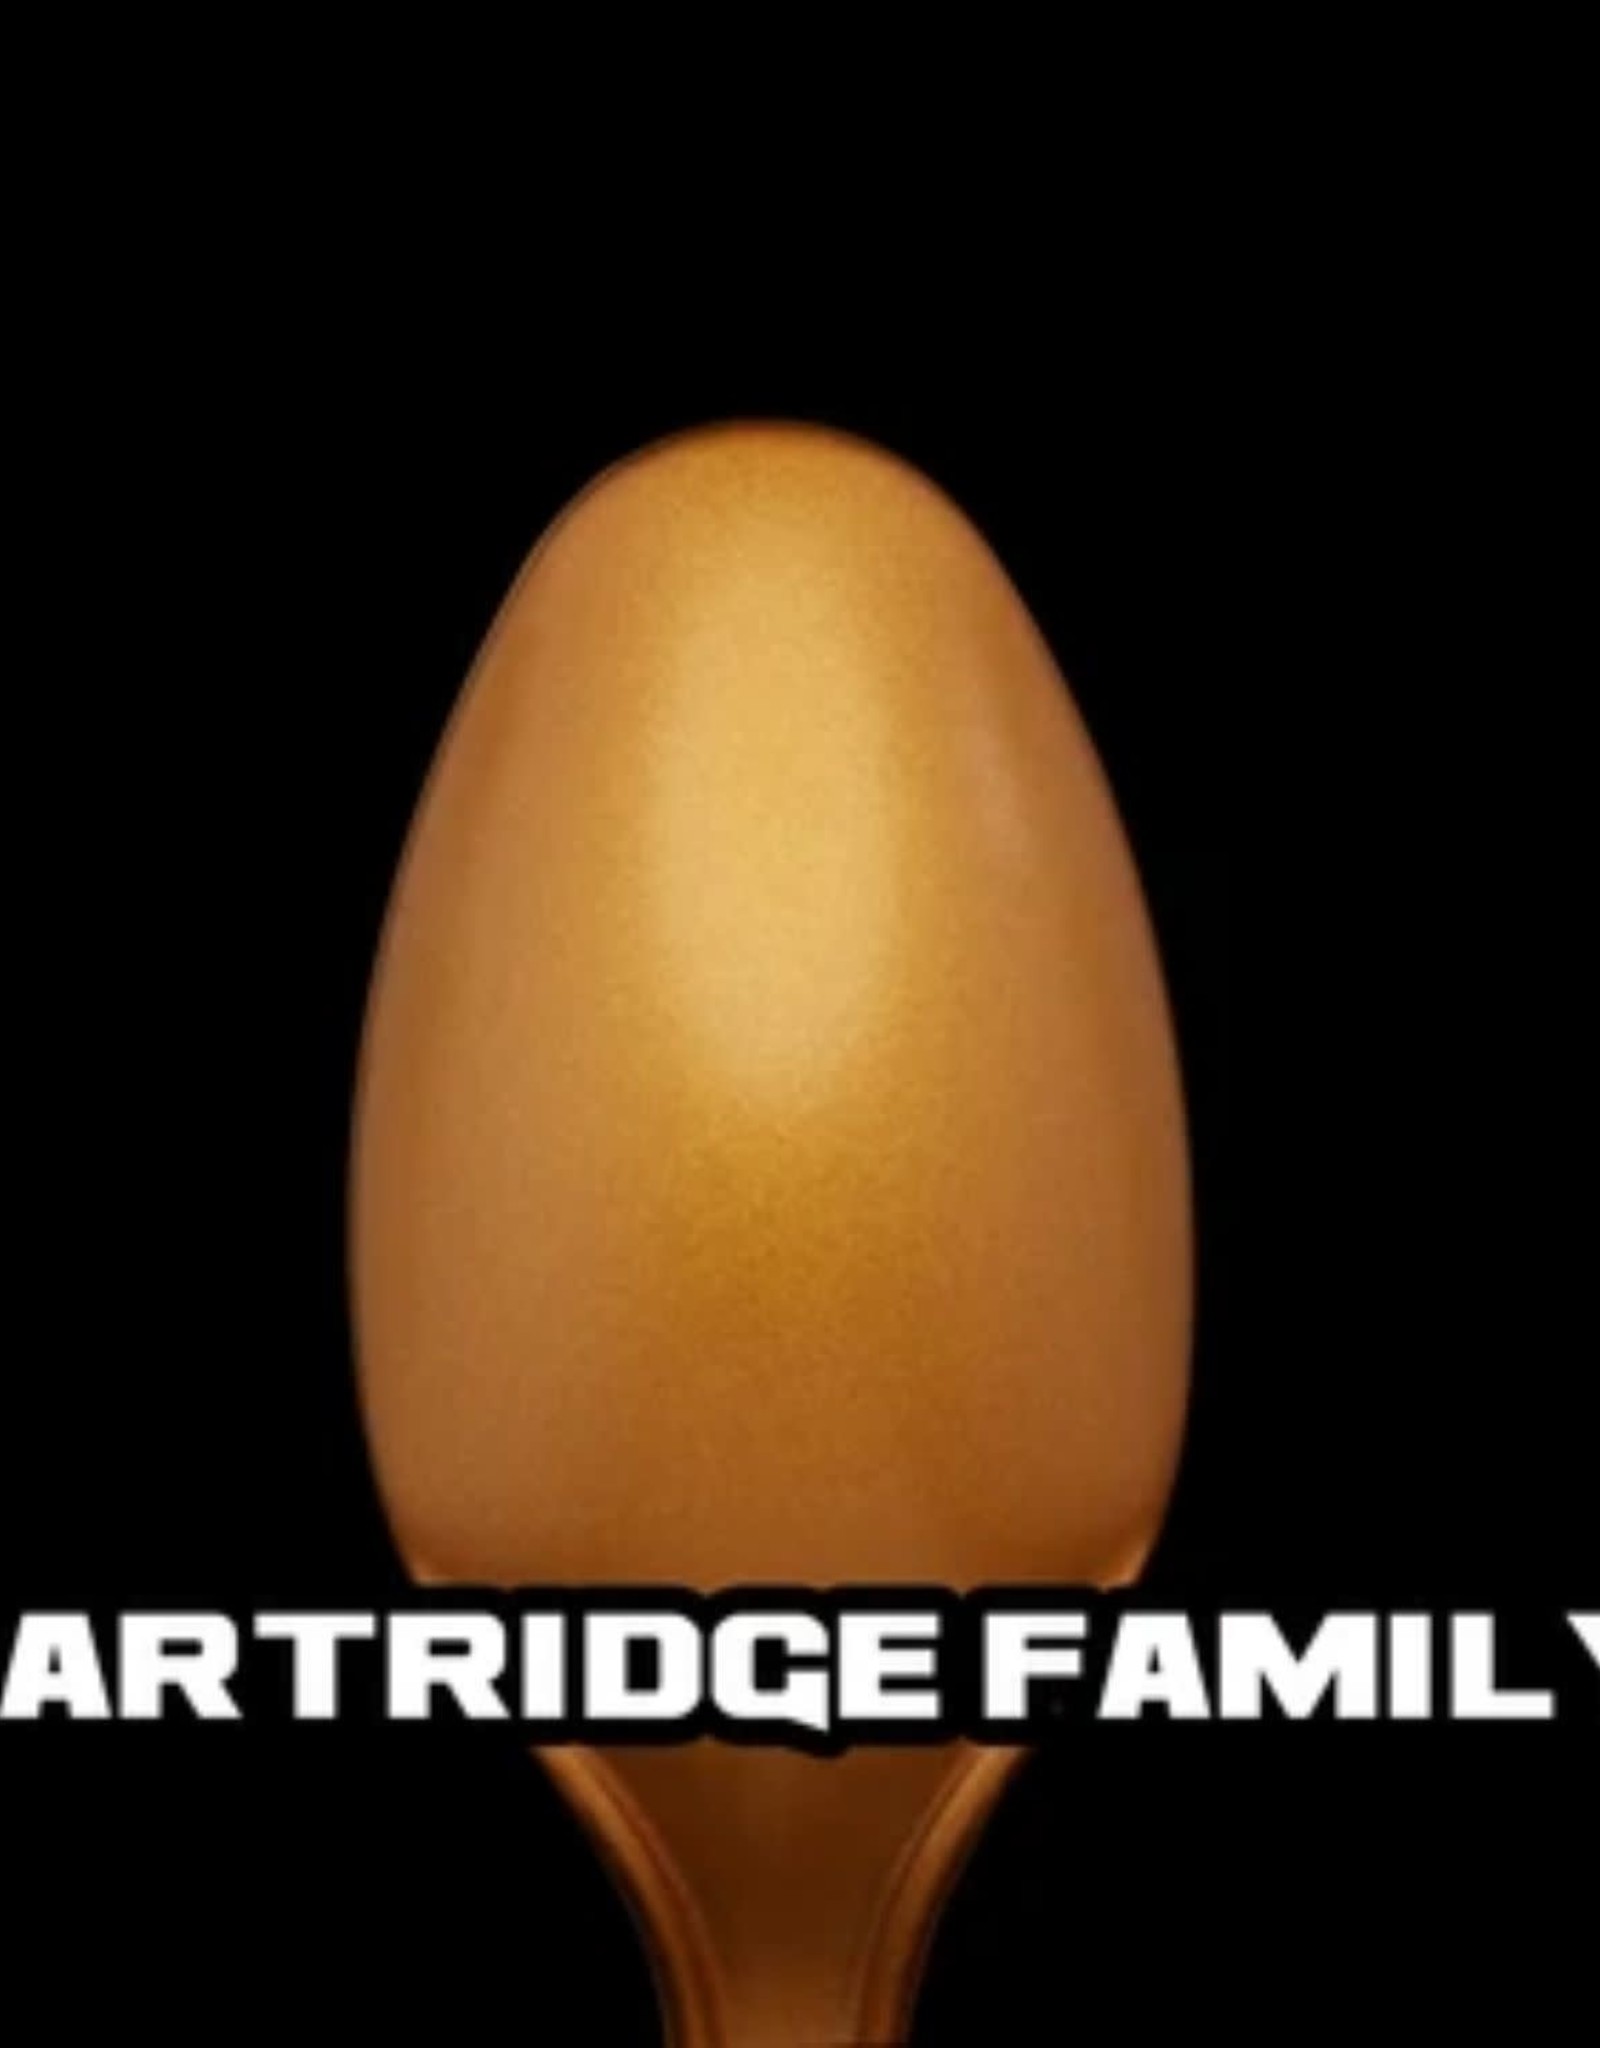 Turbo Dork Cartridge Family - Metallic